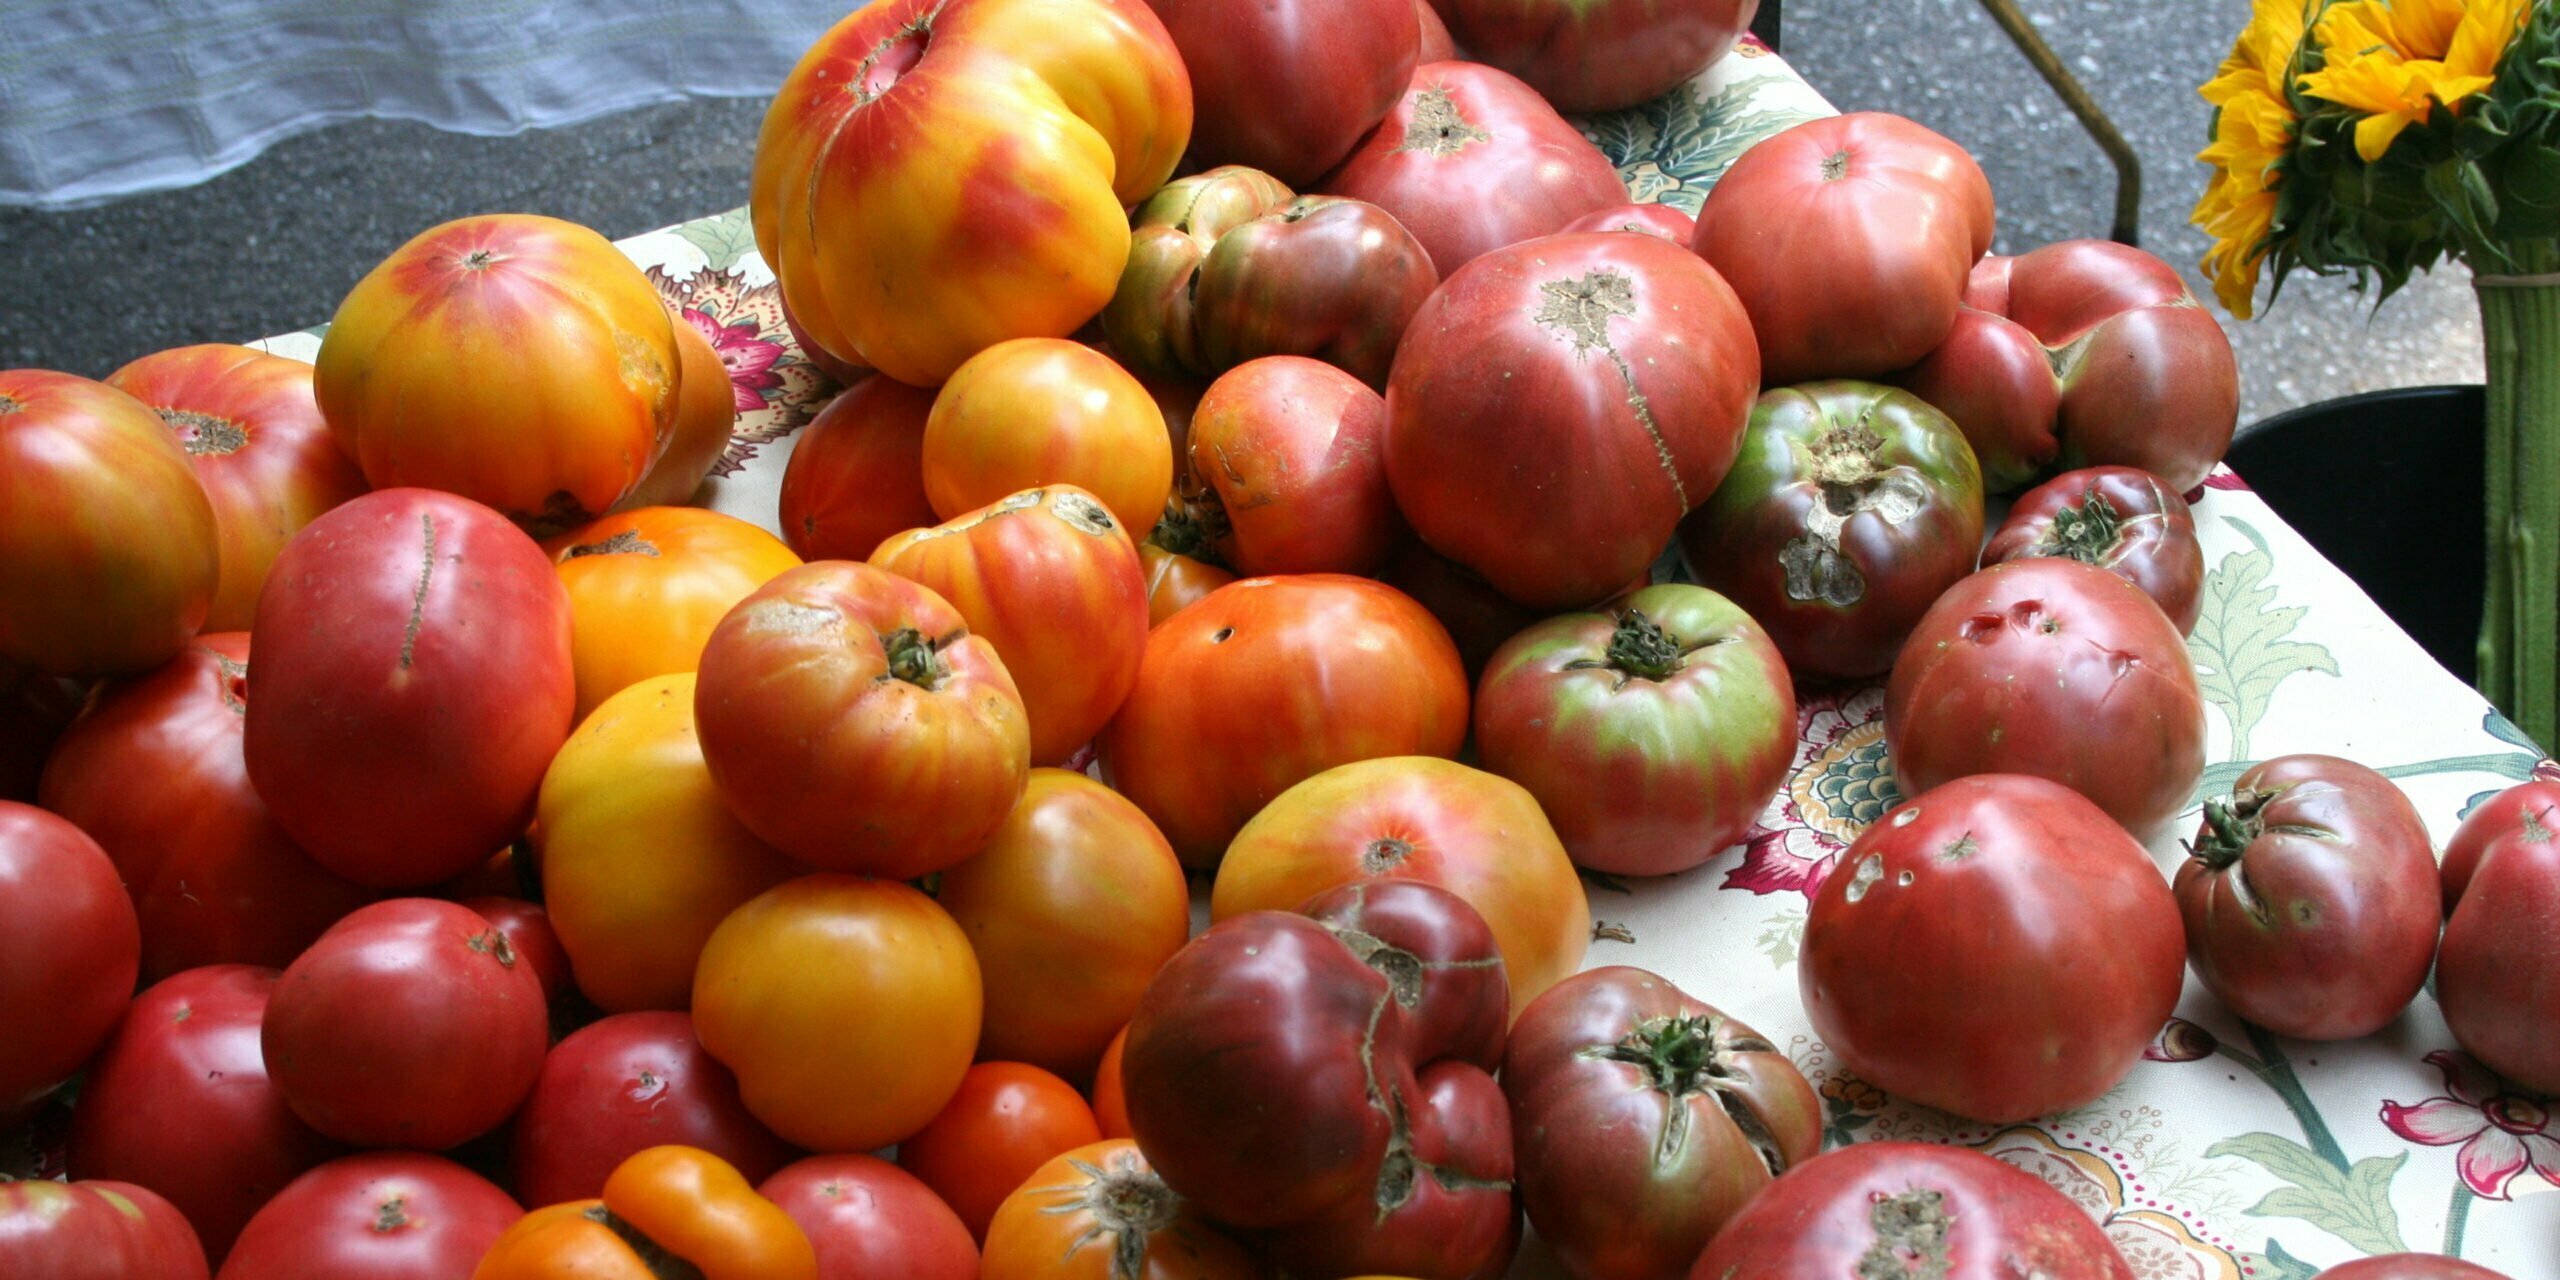 tomatoes from Full Sun Farm